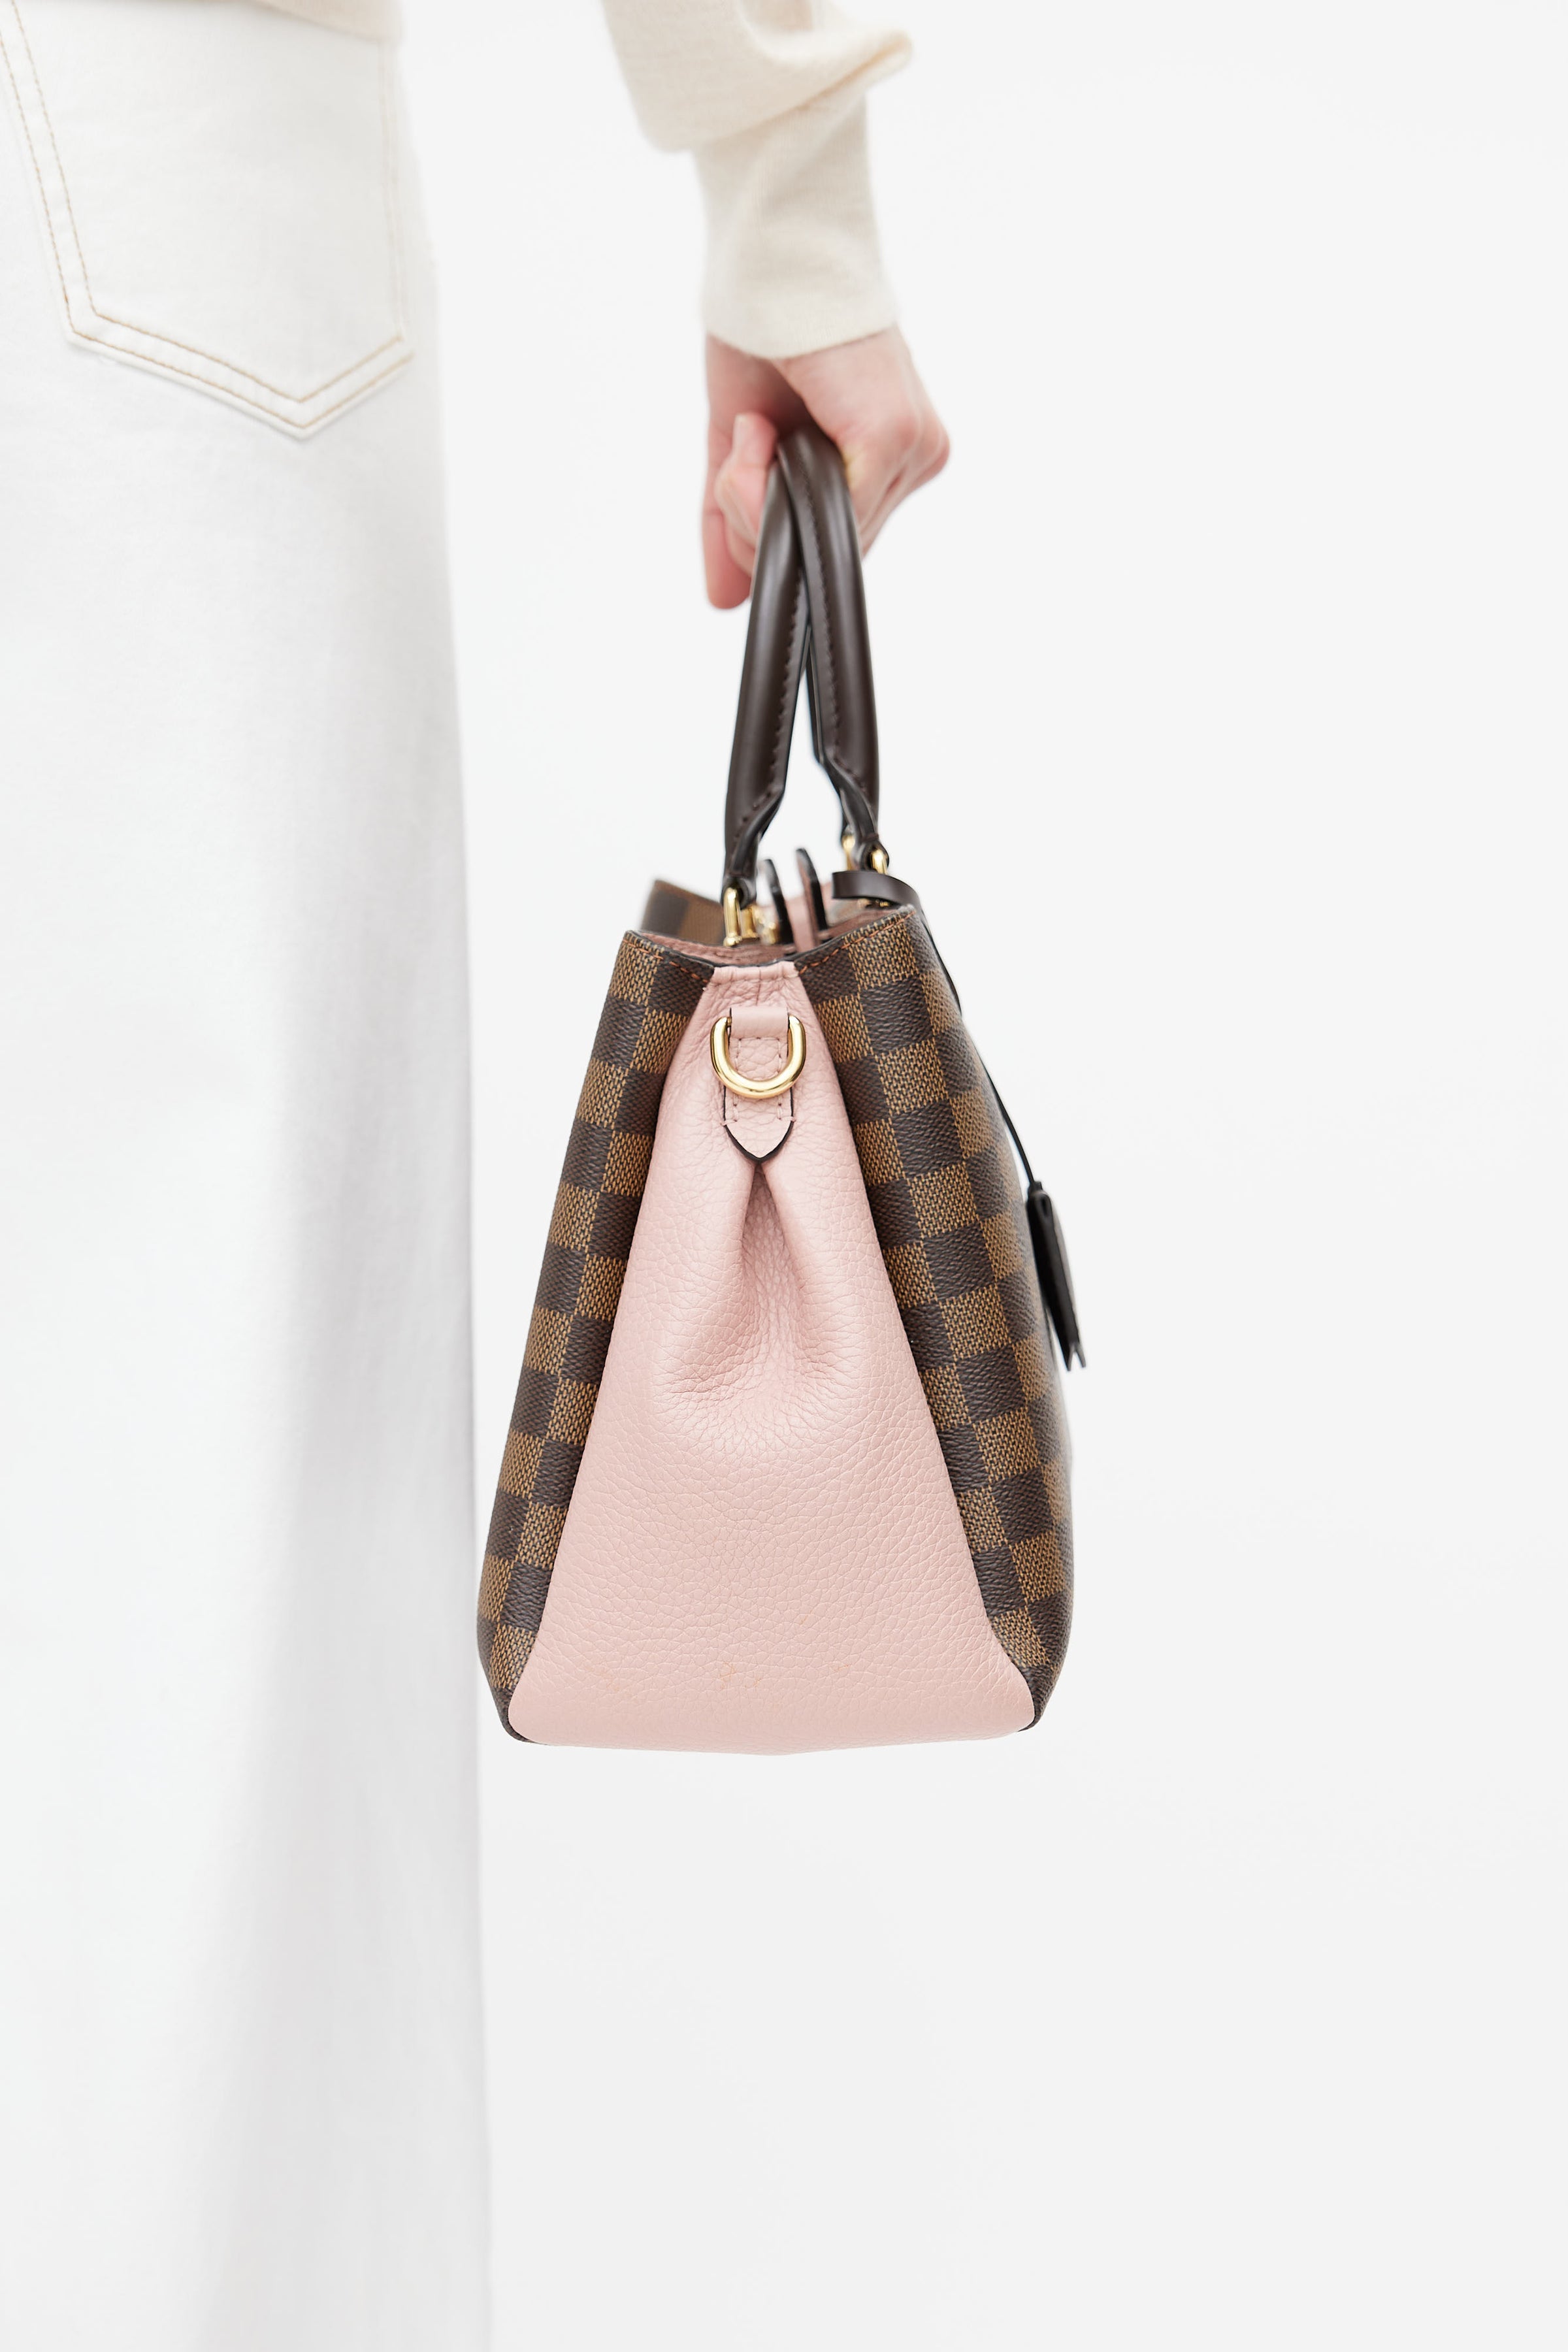 Louis Vuitton Banks Big on Mini Bags for Fall 2019 - PurseBlog